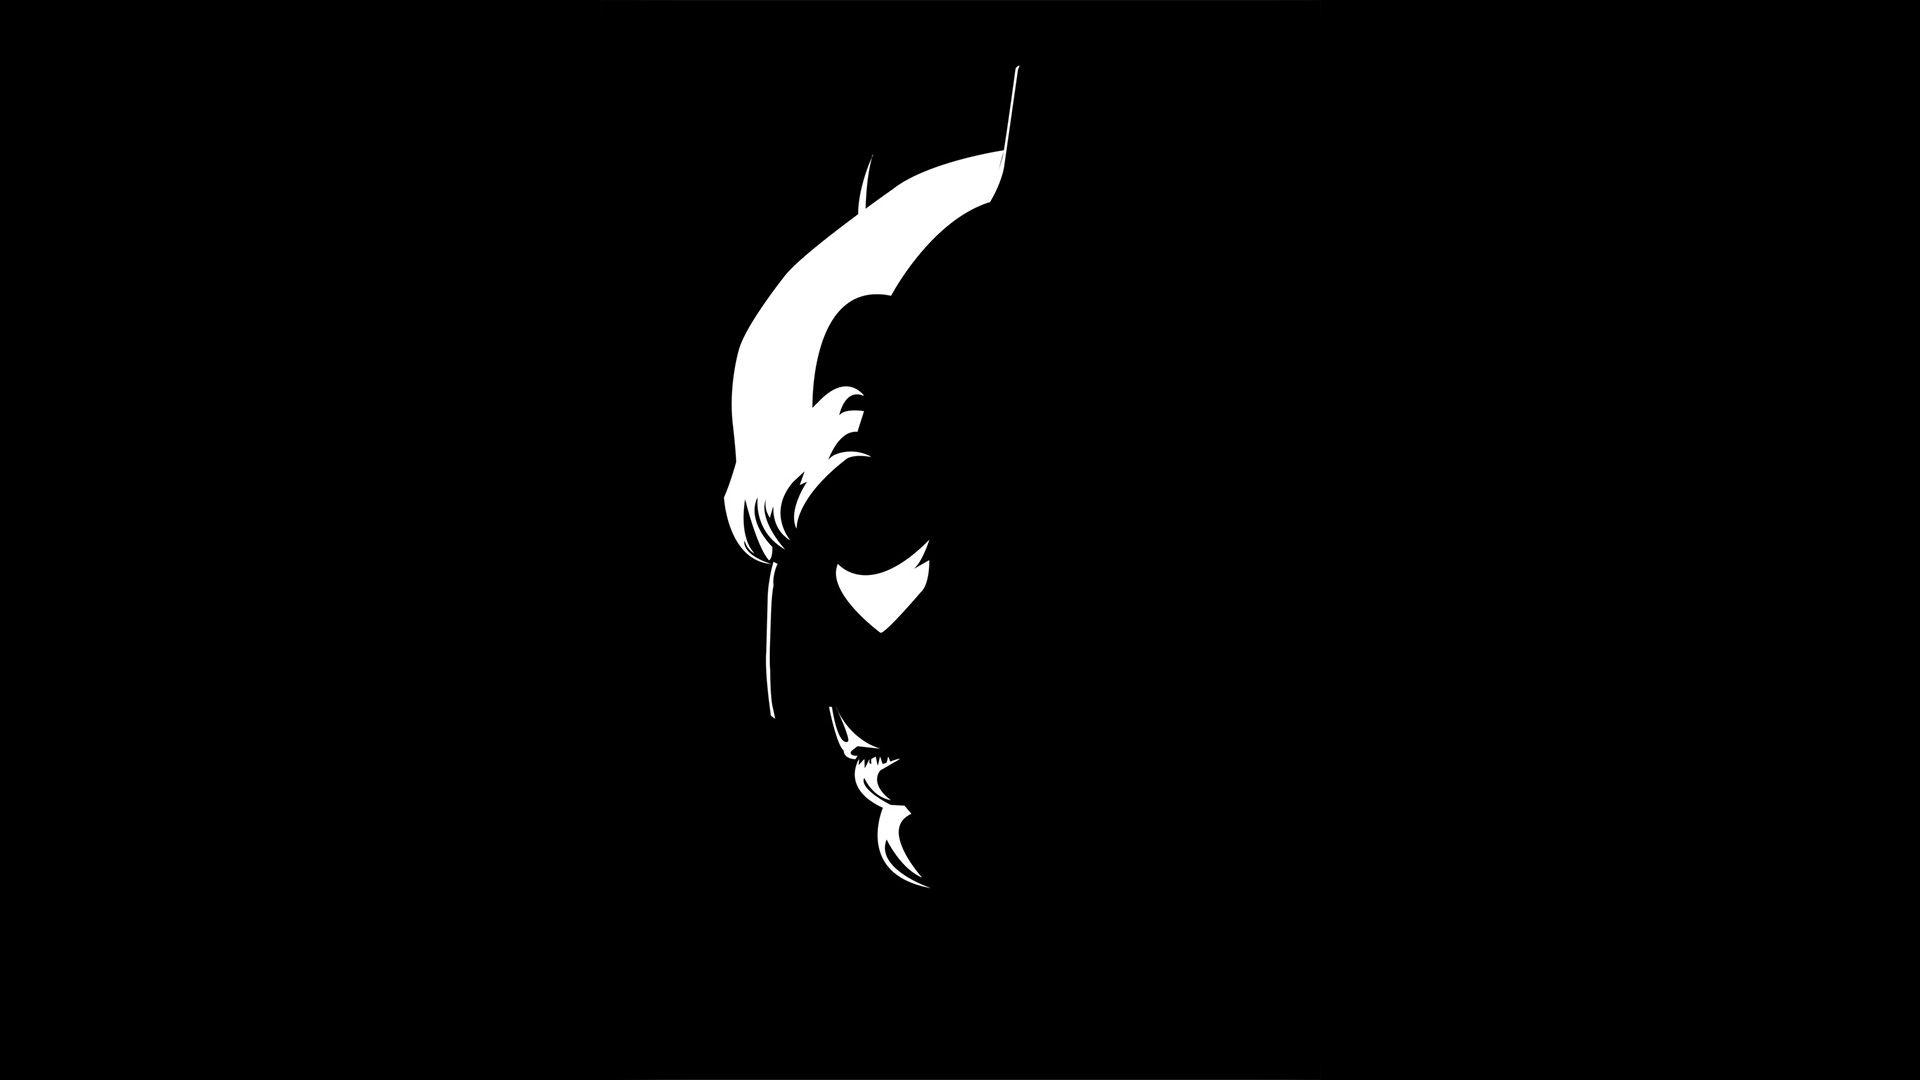 Batman Black And White, HD Superheroes, 4k Wallpaper, Image